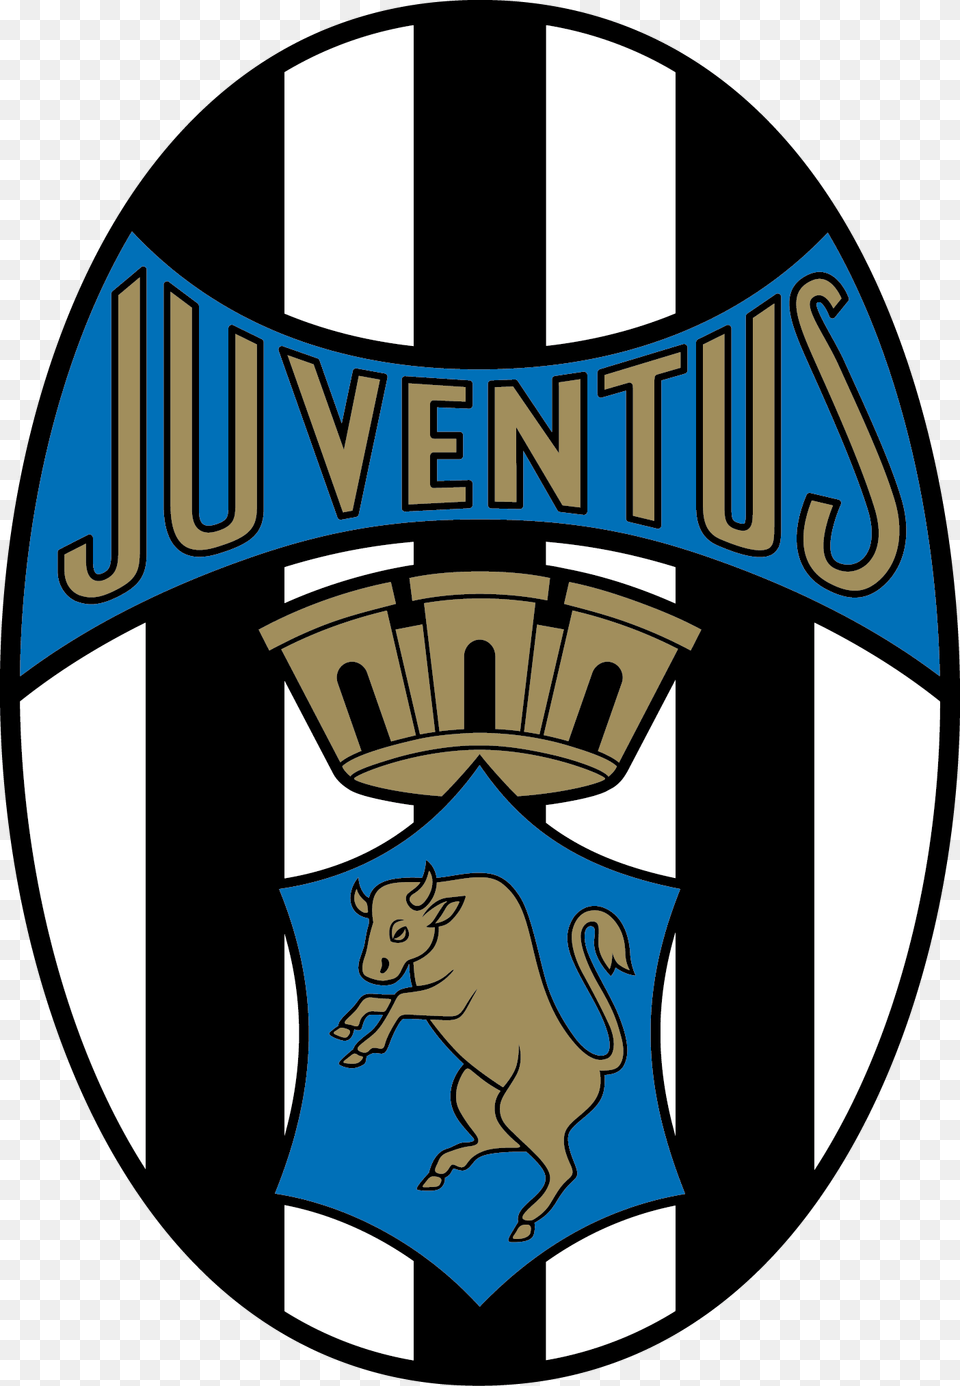 Juventus Team Logo Soccer Hs Football Football Emblem, Badge, Symbol Png Image